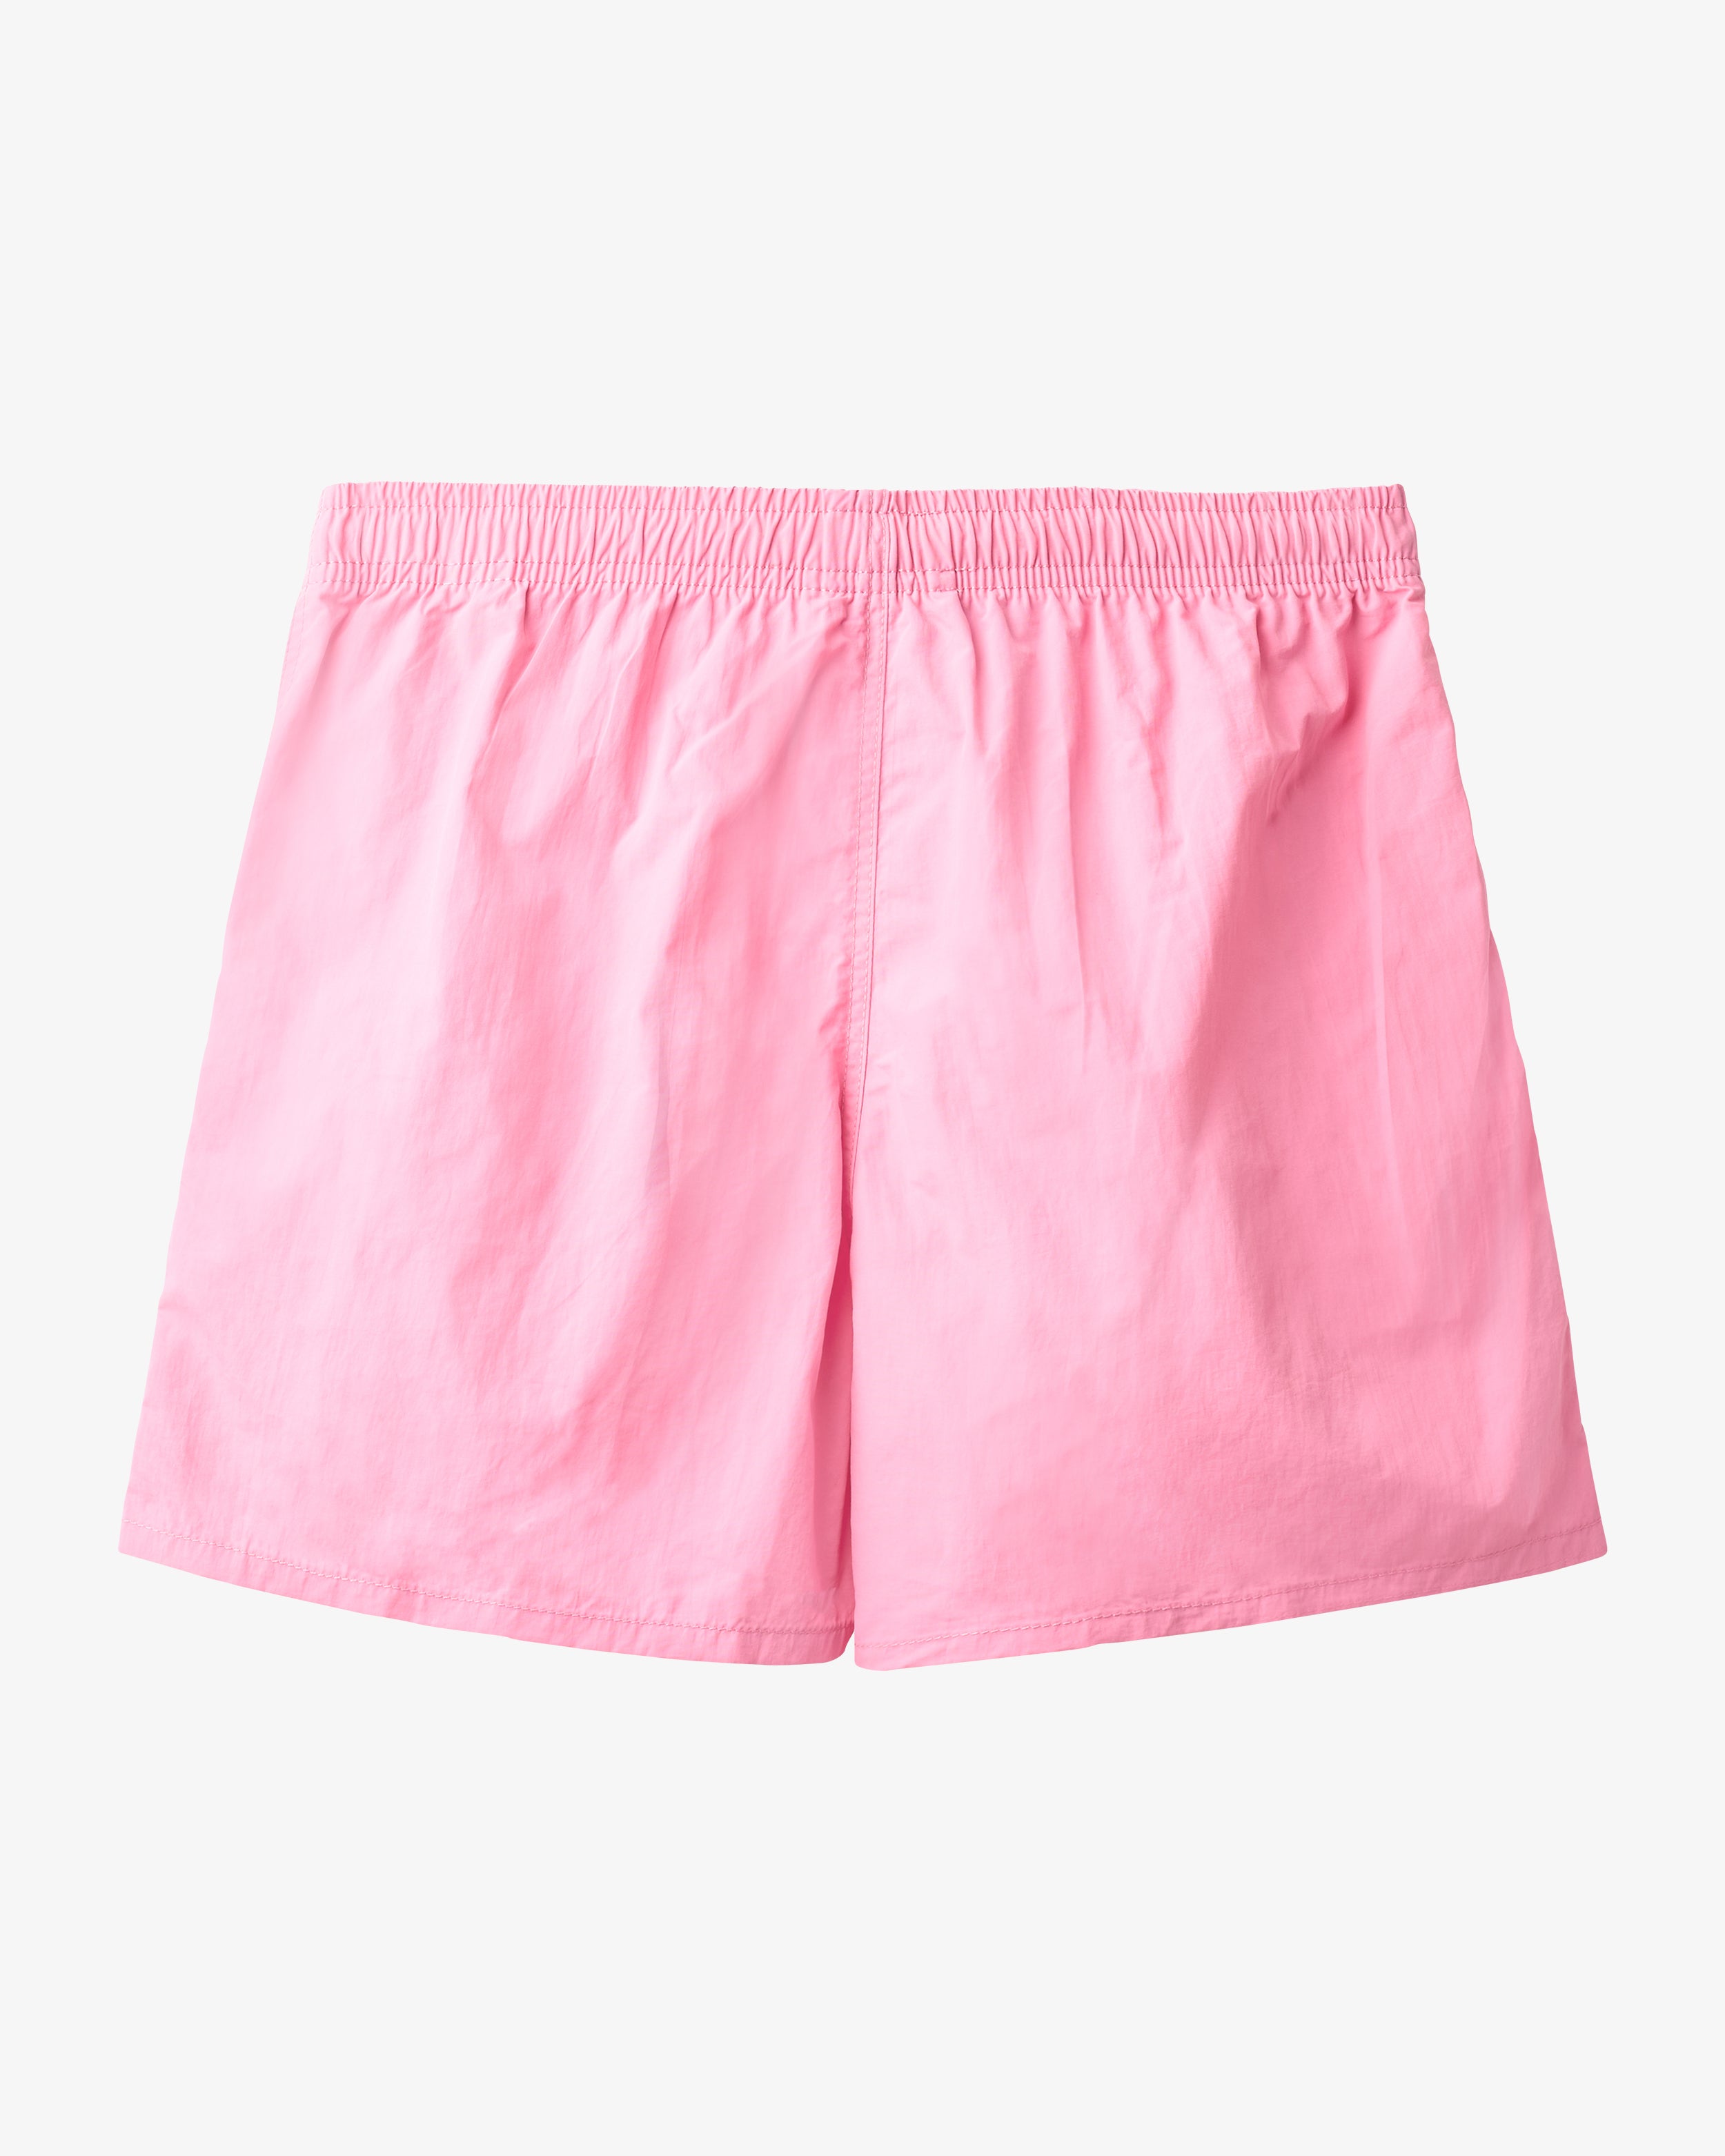 Leisure Woman Swim Shorts - Sachet Pink